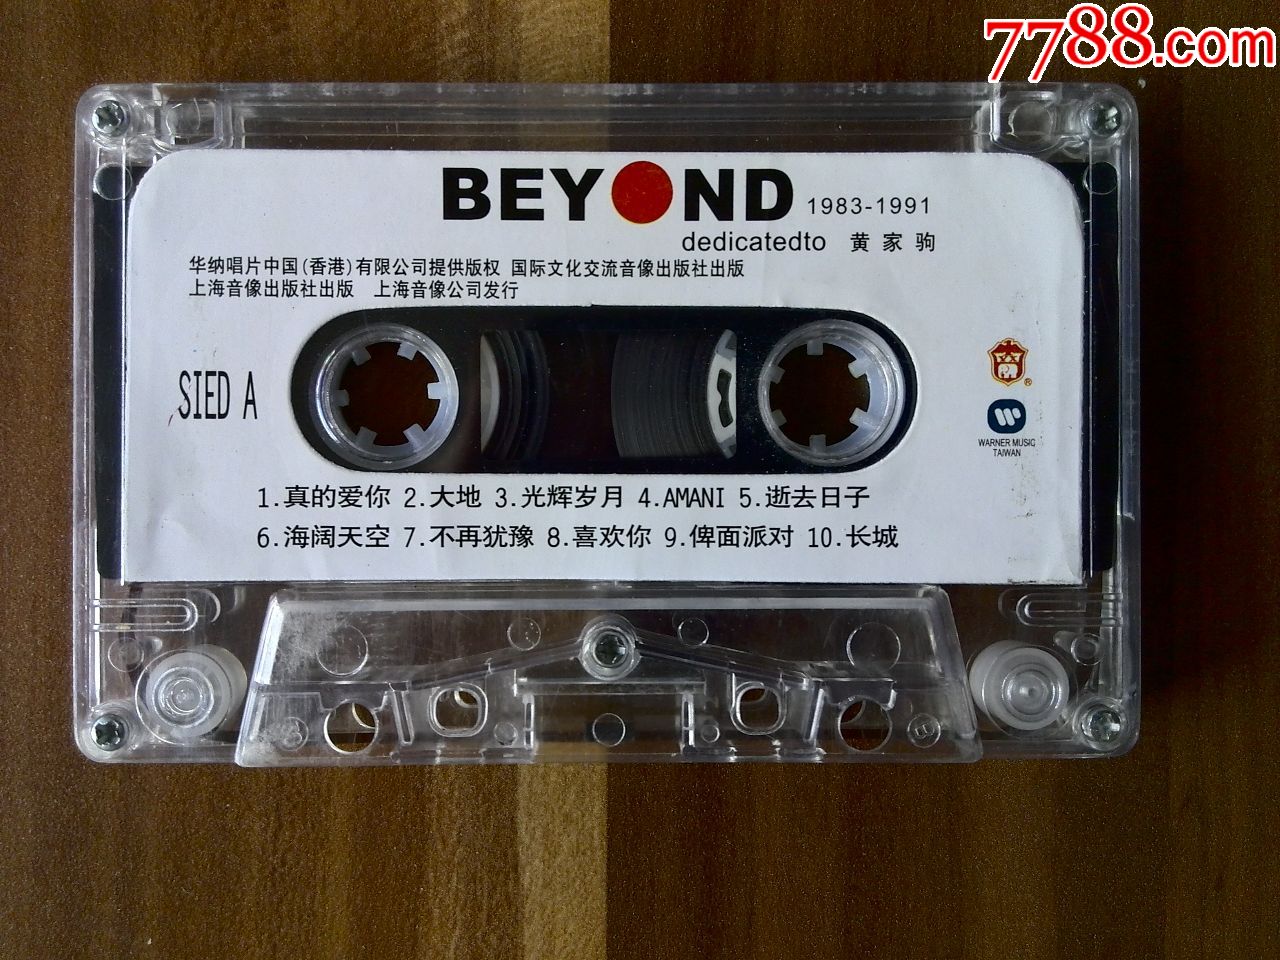 EYOND专辑《光辉岁月》华纳唱片版权,上海音